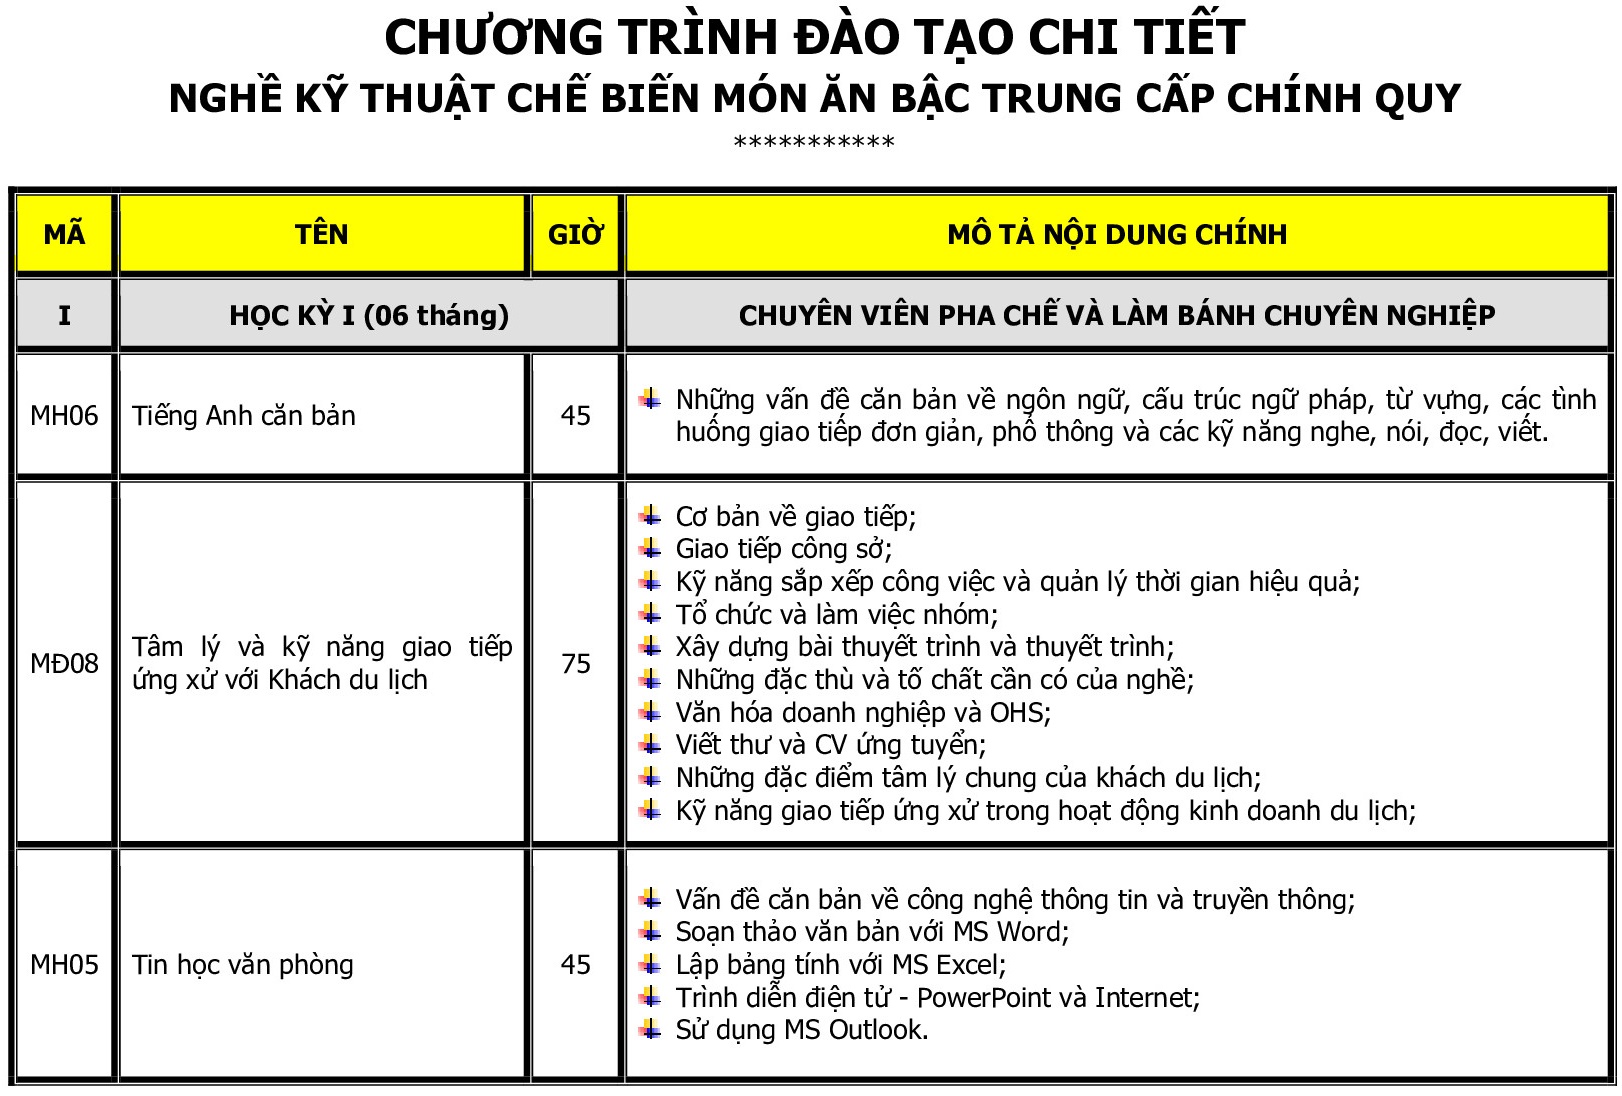 CHUONG TRINH TRUNG CAP - KTCBMA 2020_p001